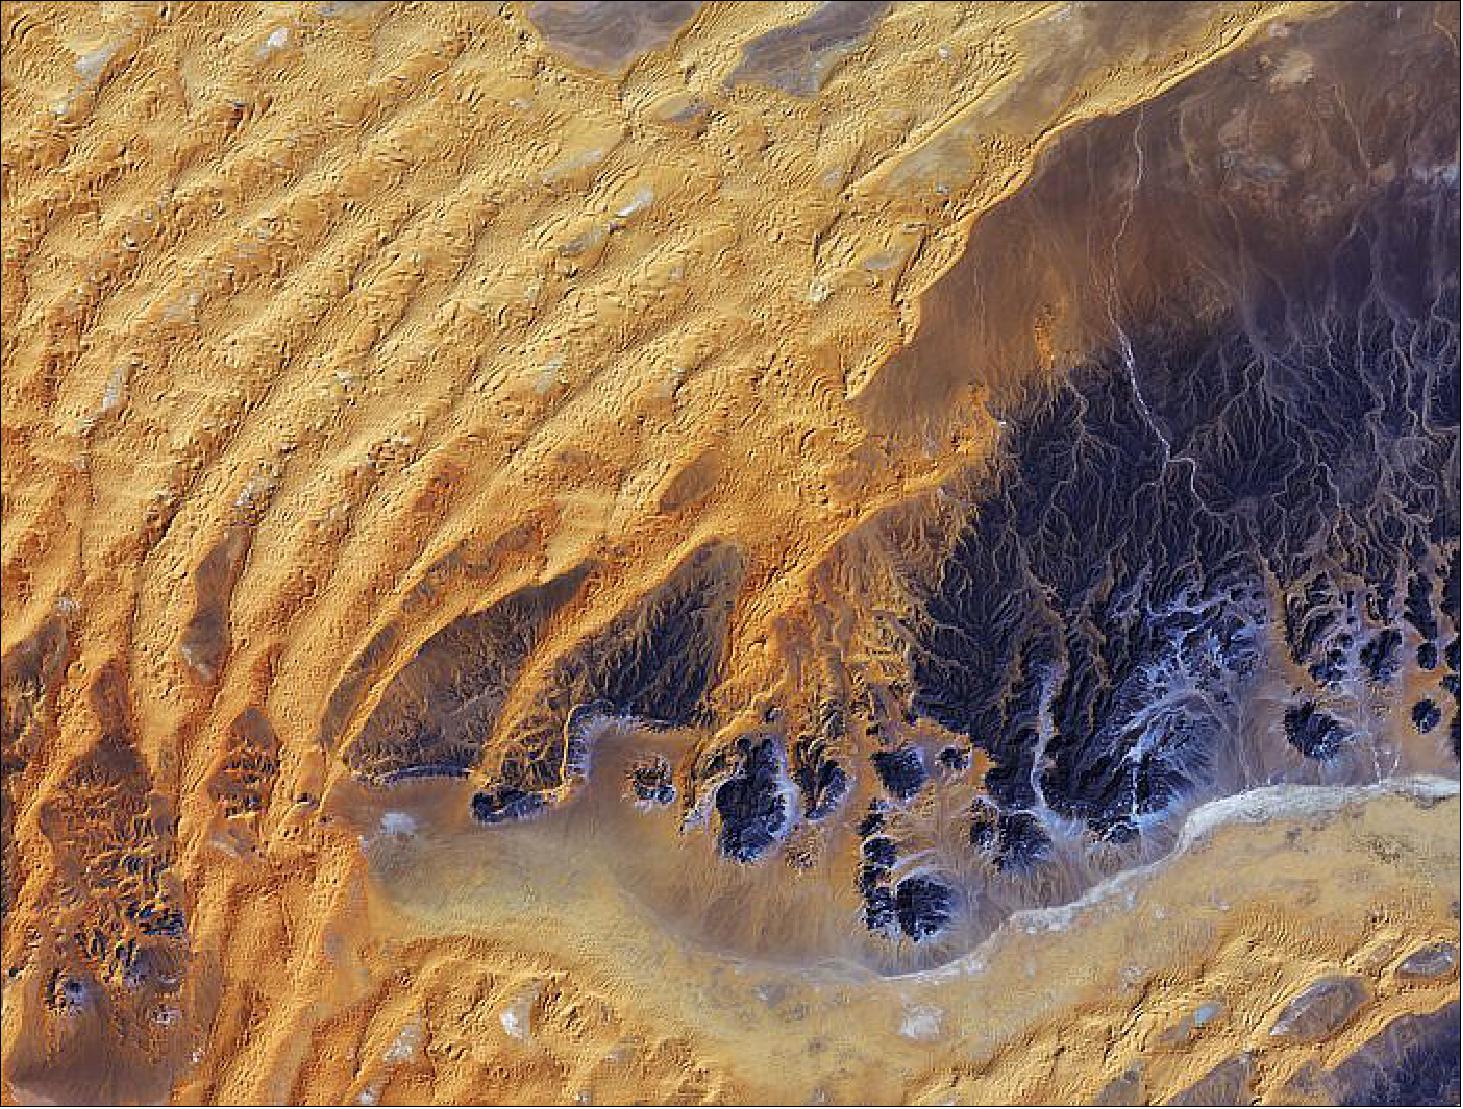 Figure 13: The ALOS spacecraft acquired this AVNIR-2 image of the Sahara desert in Algeria on January 28, 2011 (image credit: JAXA, ESA)